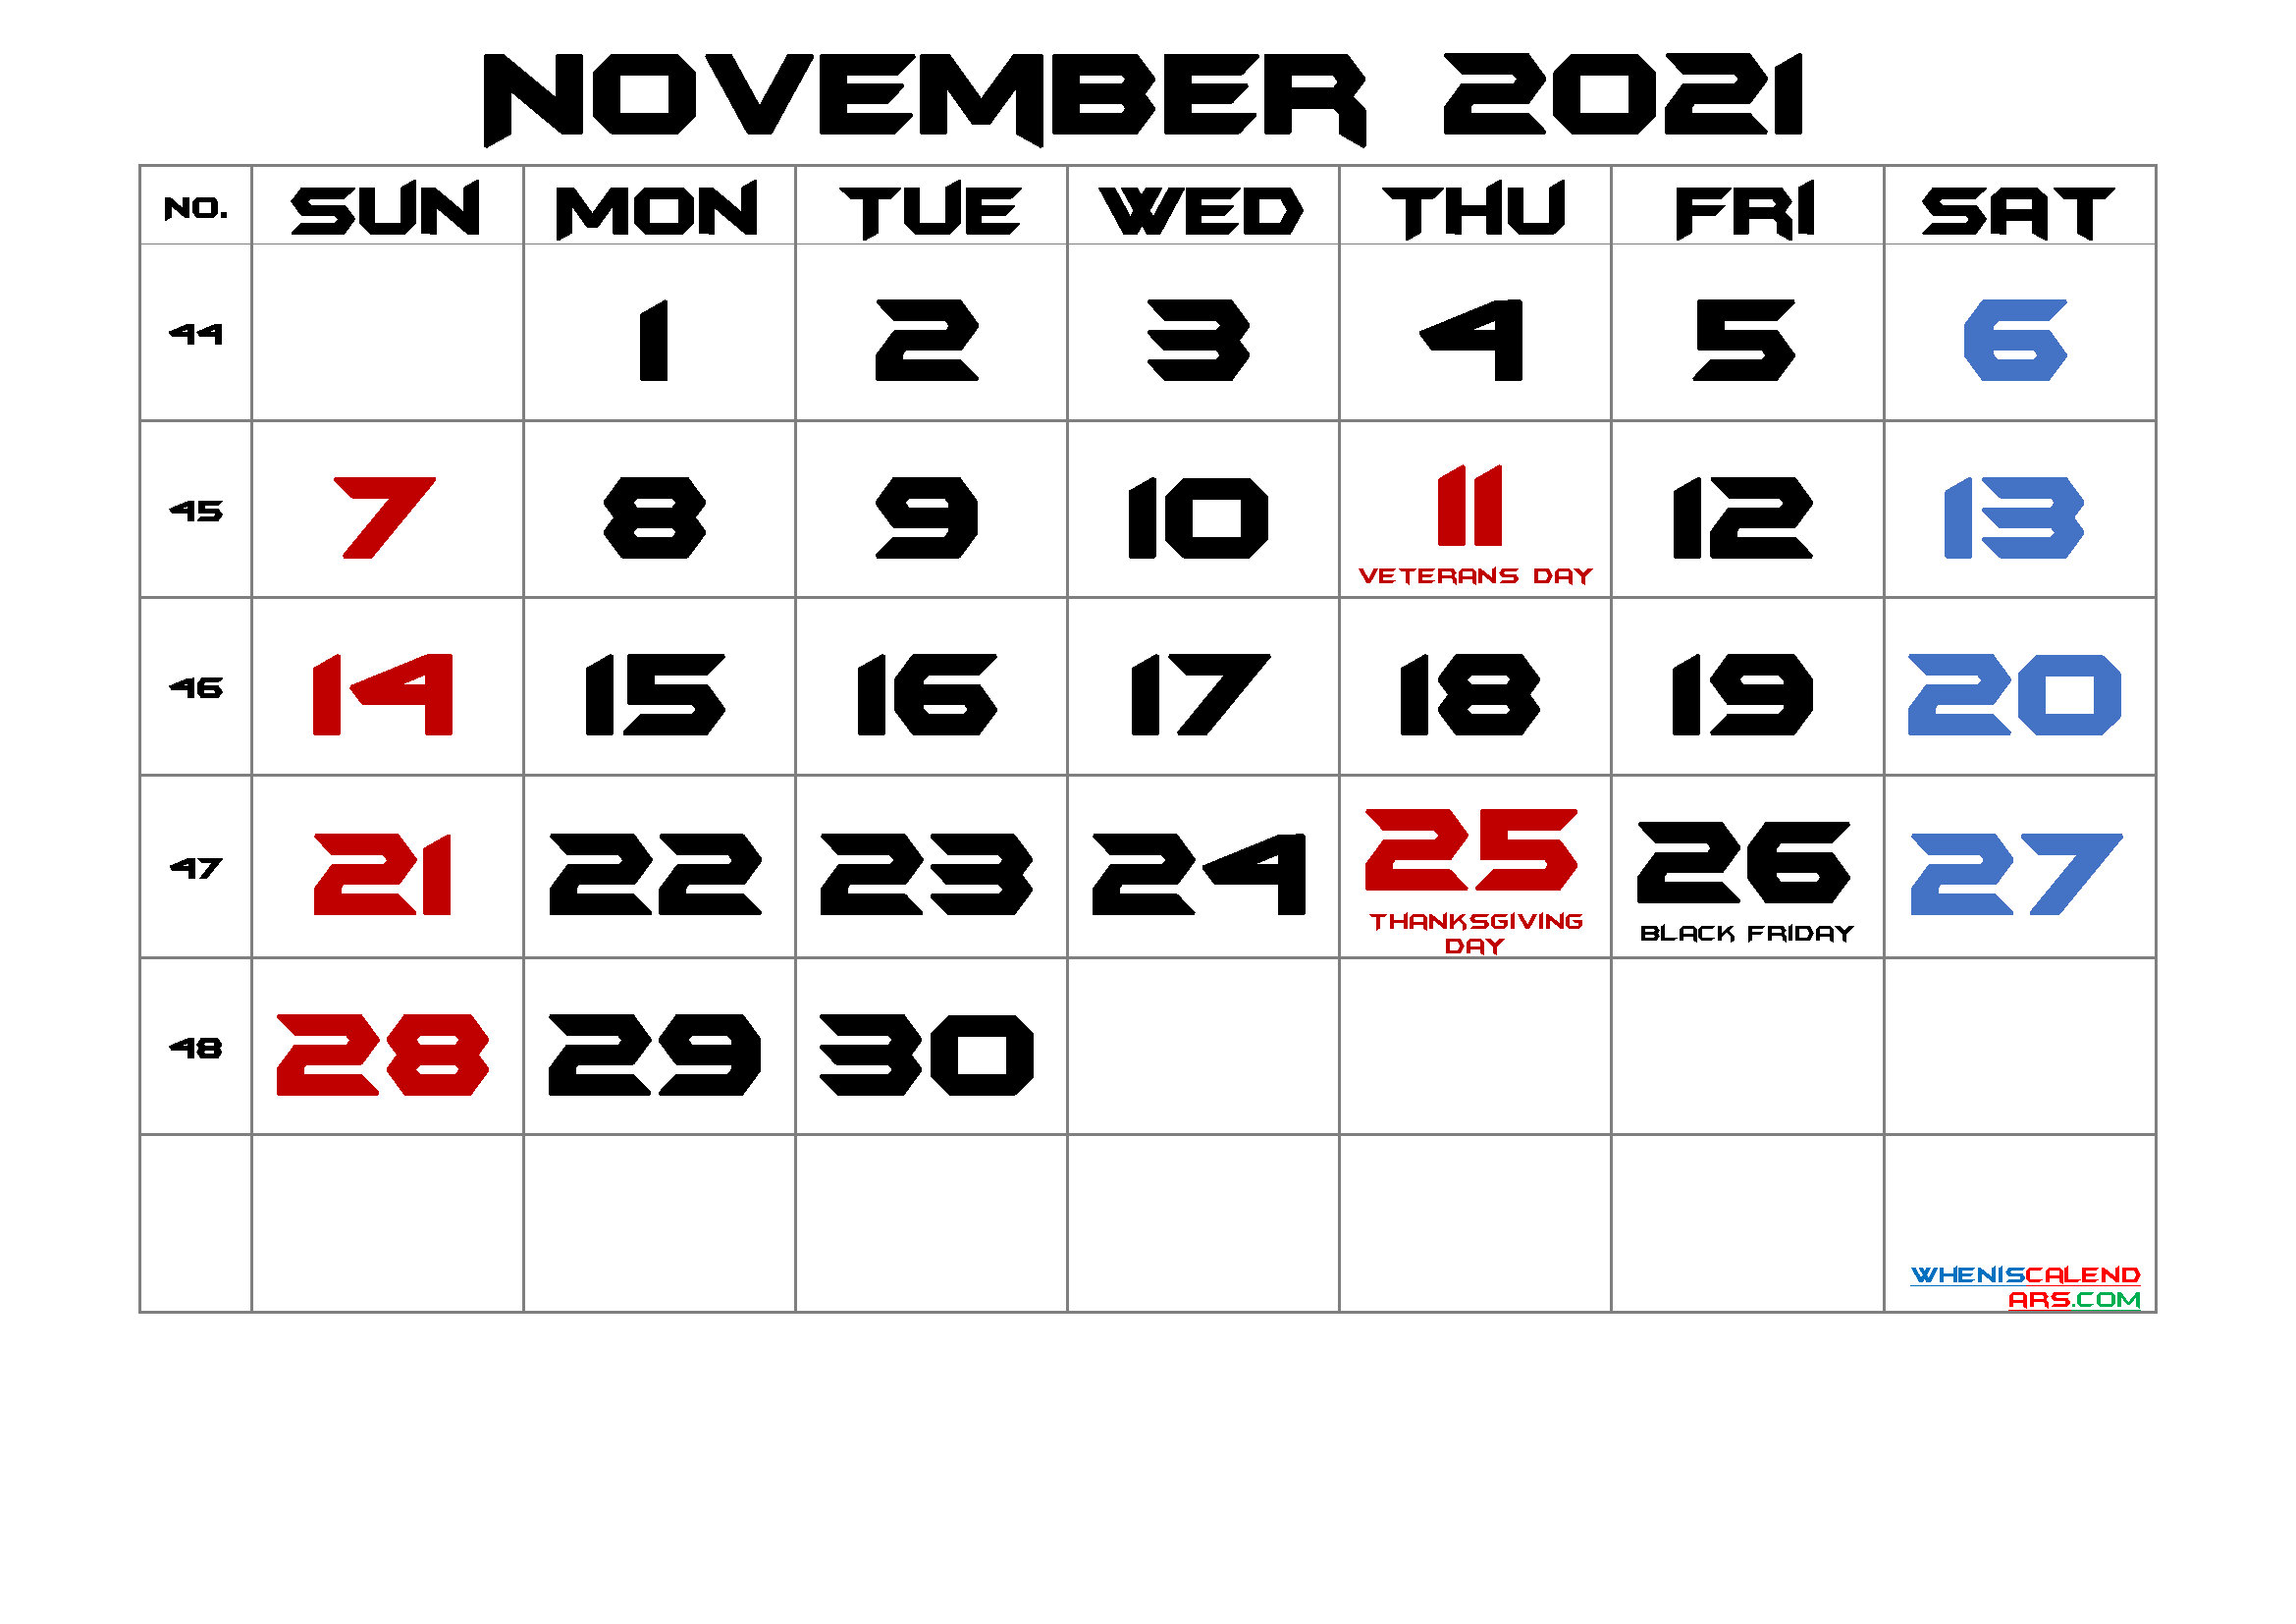 NOVEMBER 2021 Printable Calendar with Holidays